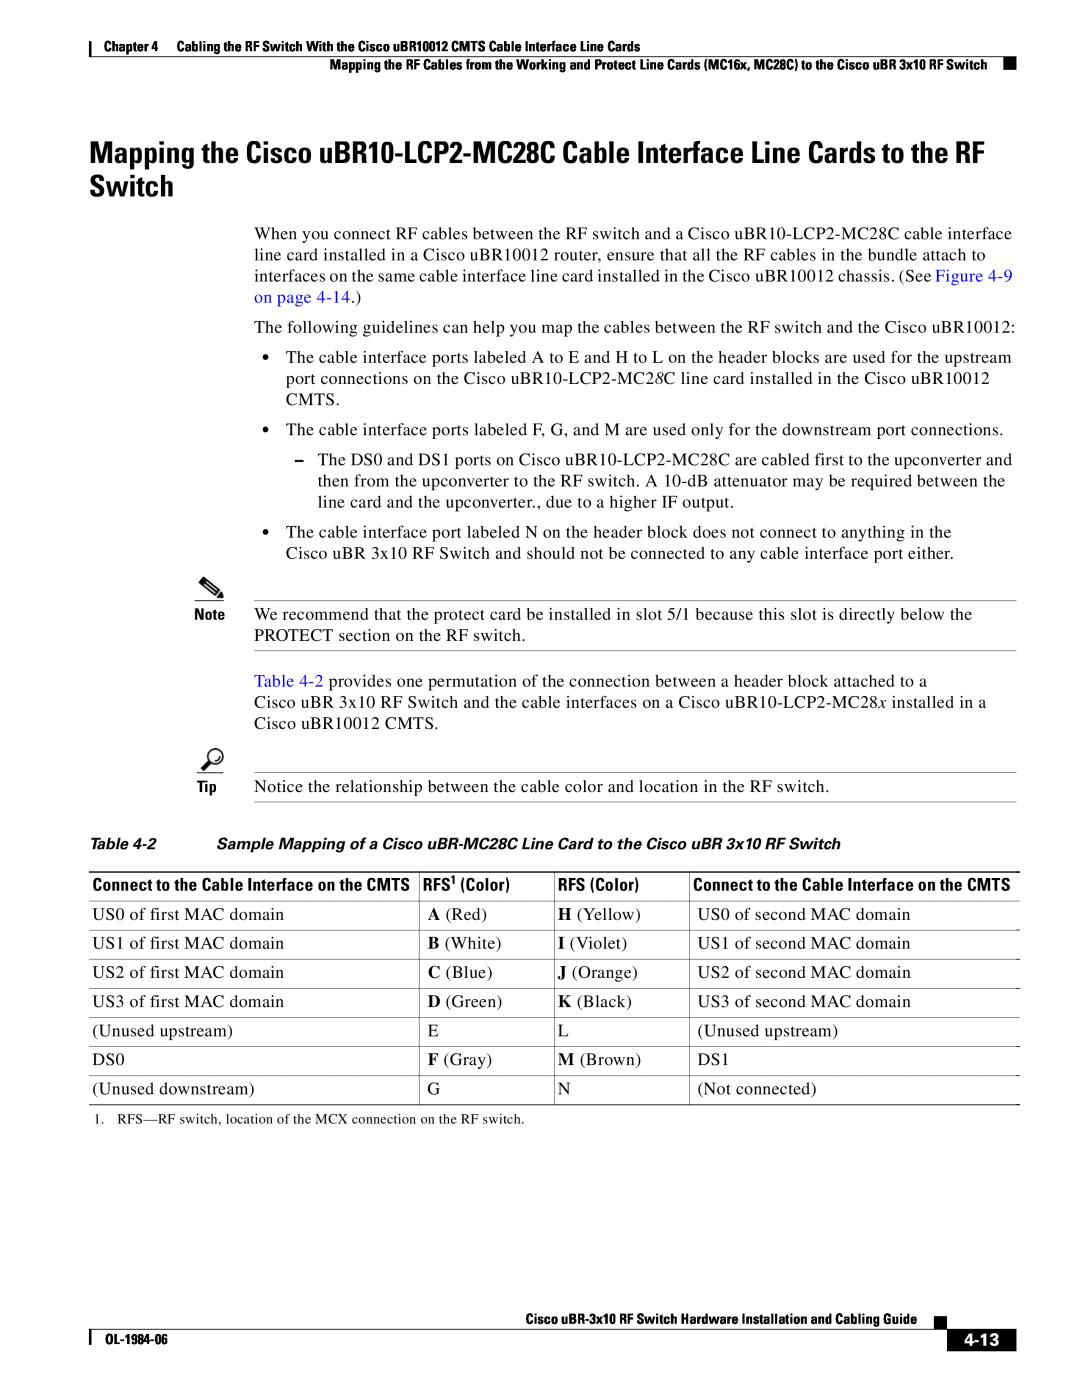 Cisco Systems UBR-3X10 manual 4-13 